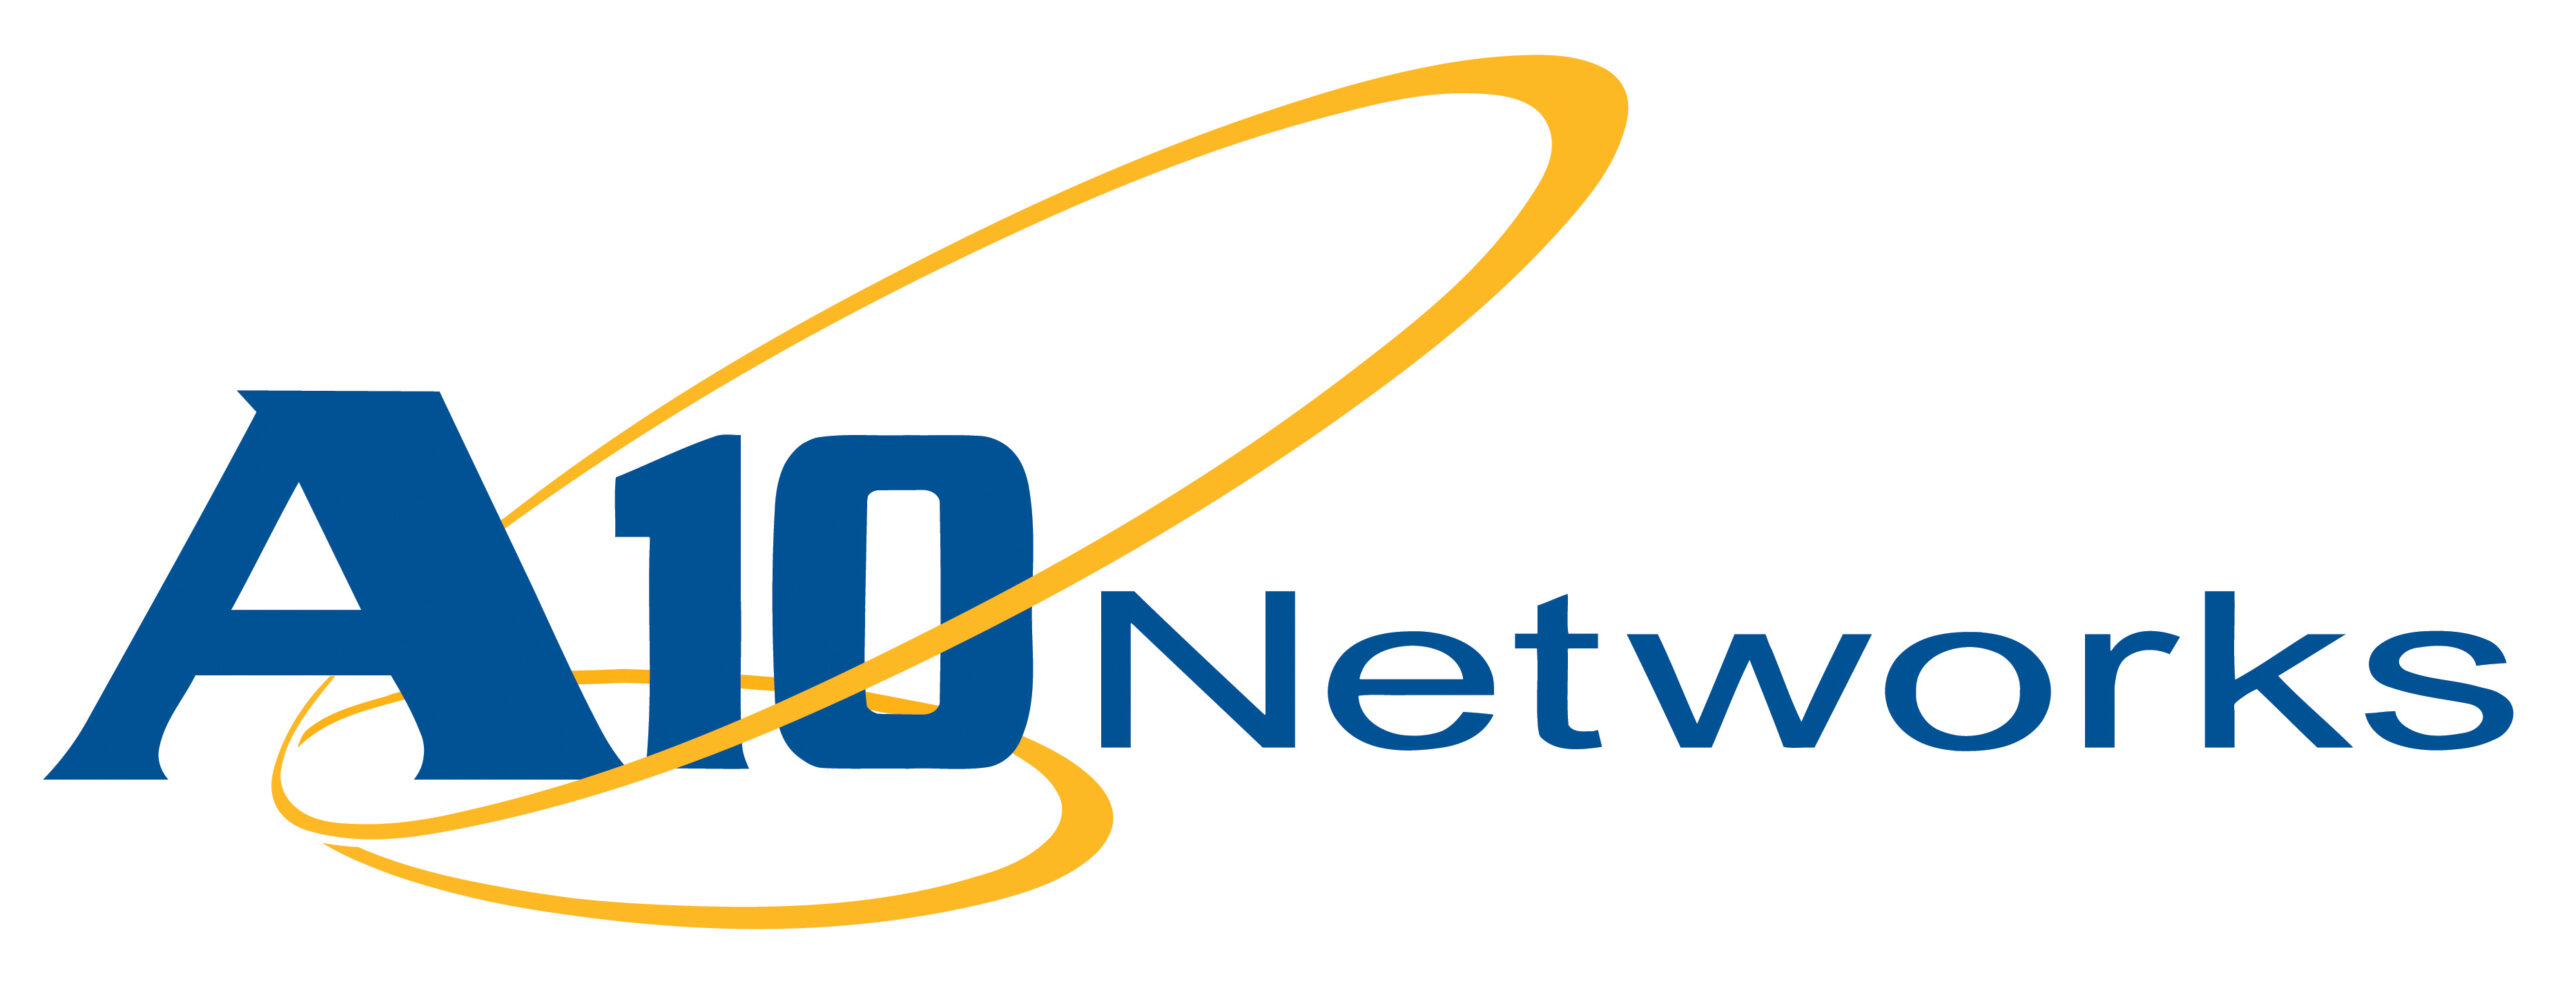 A10 Networks Company Logo